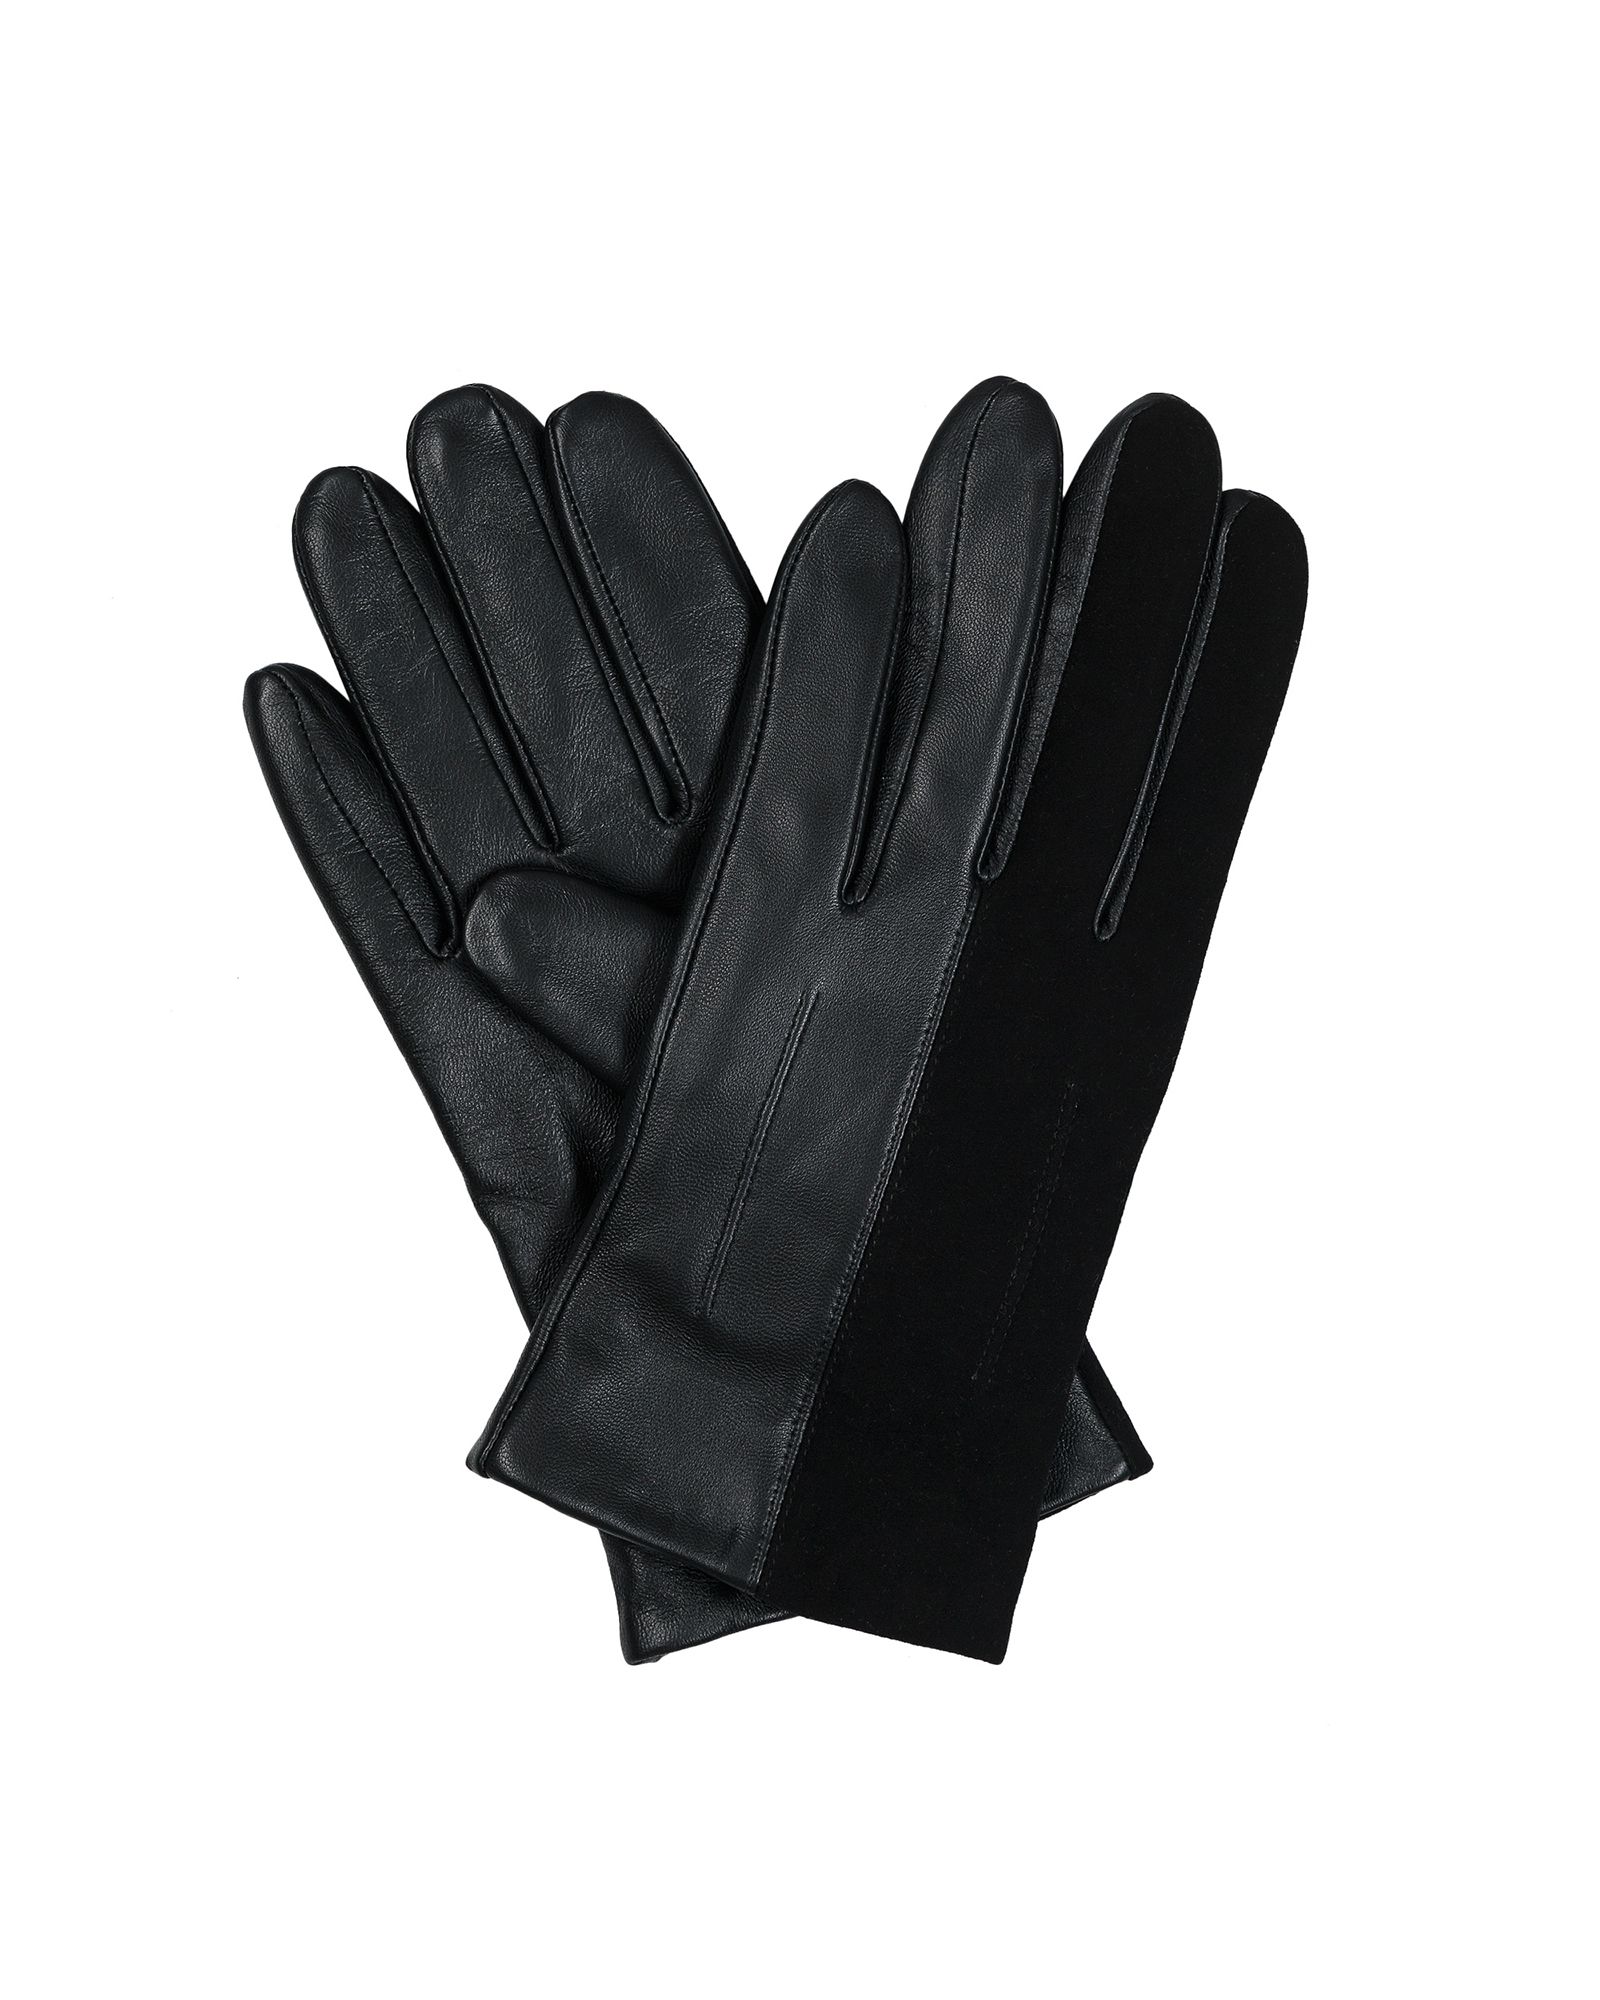 Half & Half Black Leather Gloves | Oliver Bonas